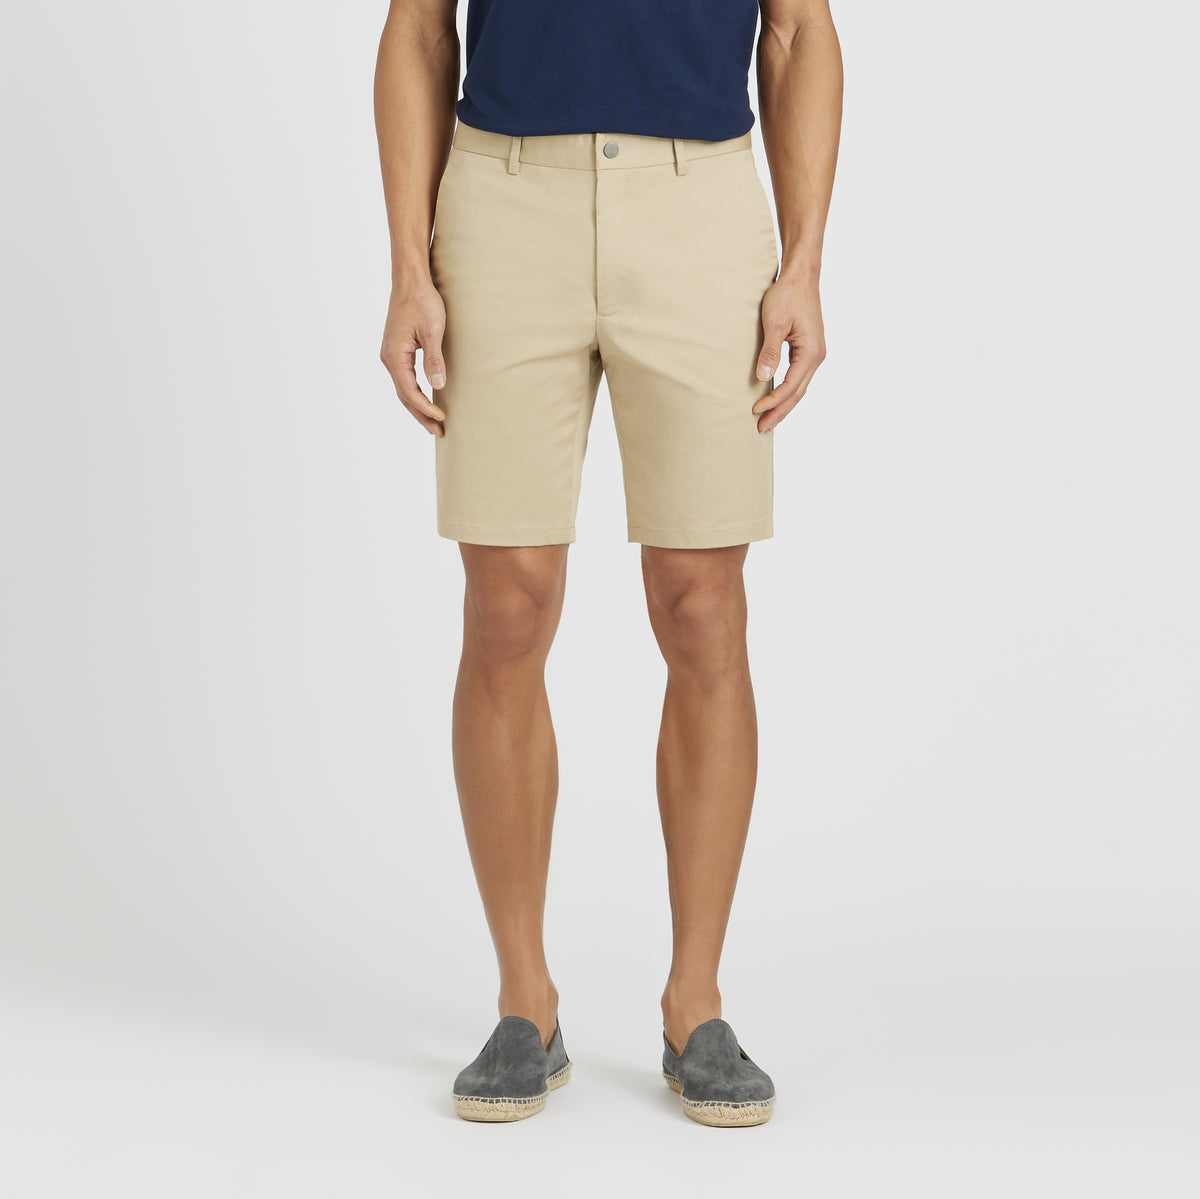 Khaki Sharp Shorts - Men's Bespoke Cotton Shorts - SPOKE - SPOKE